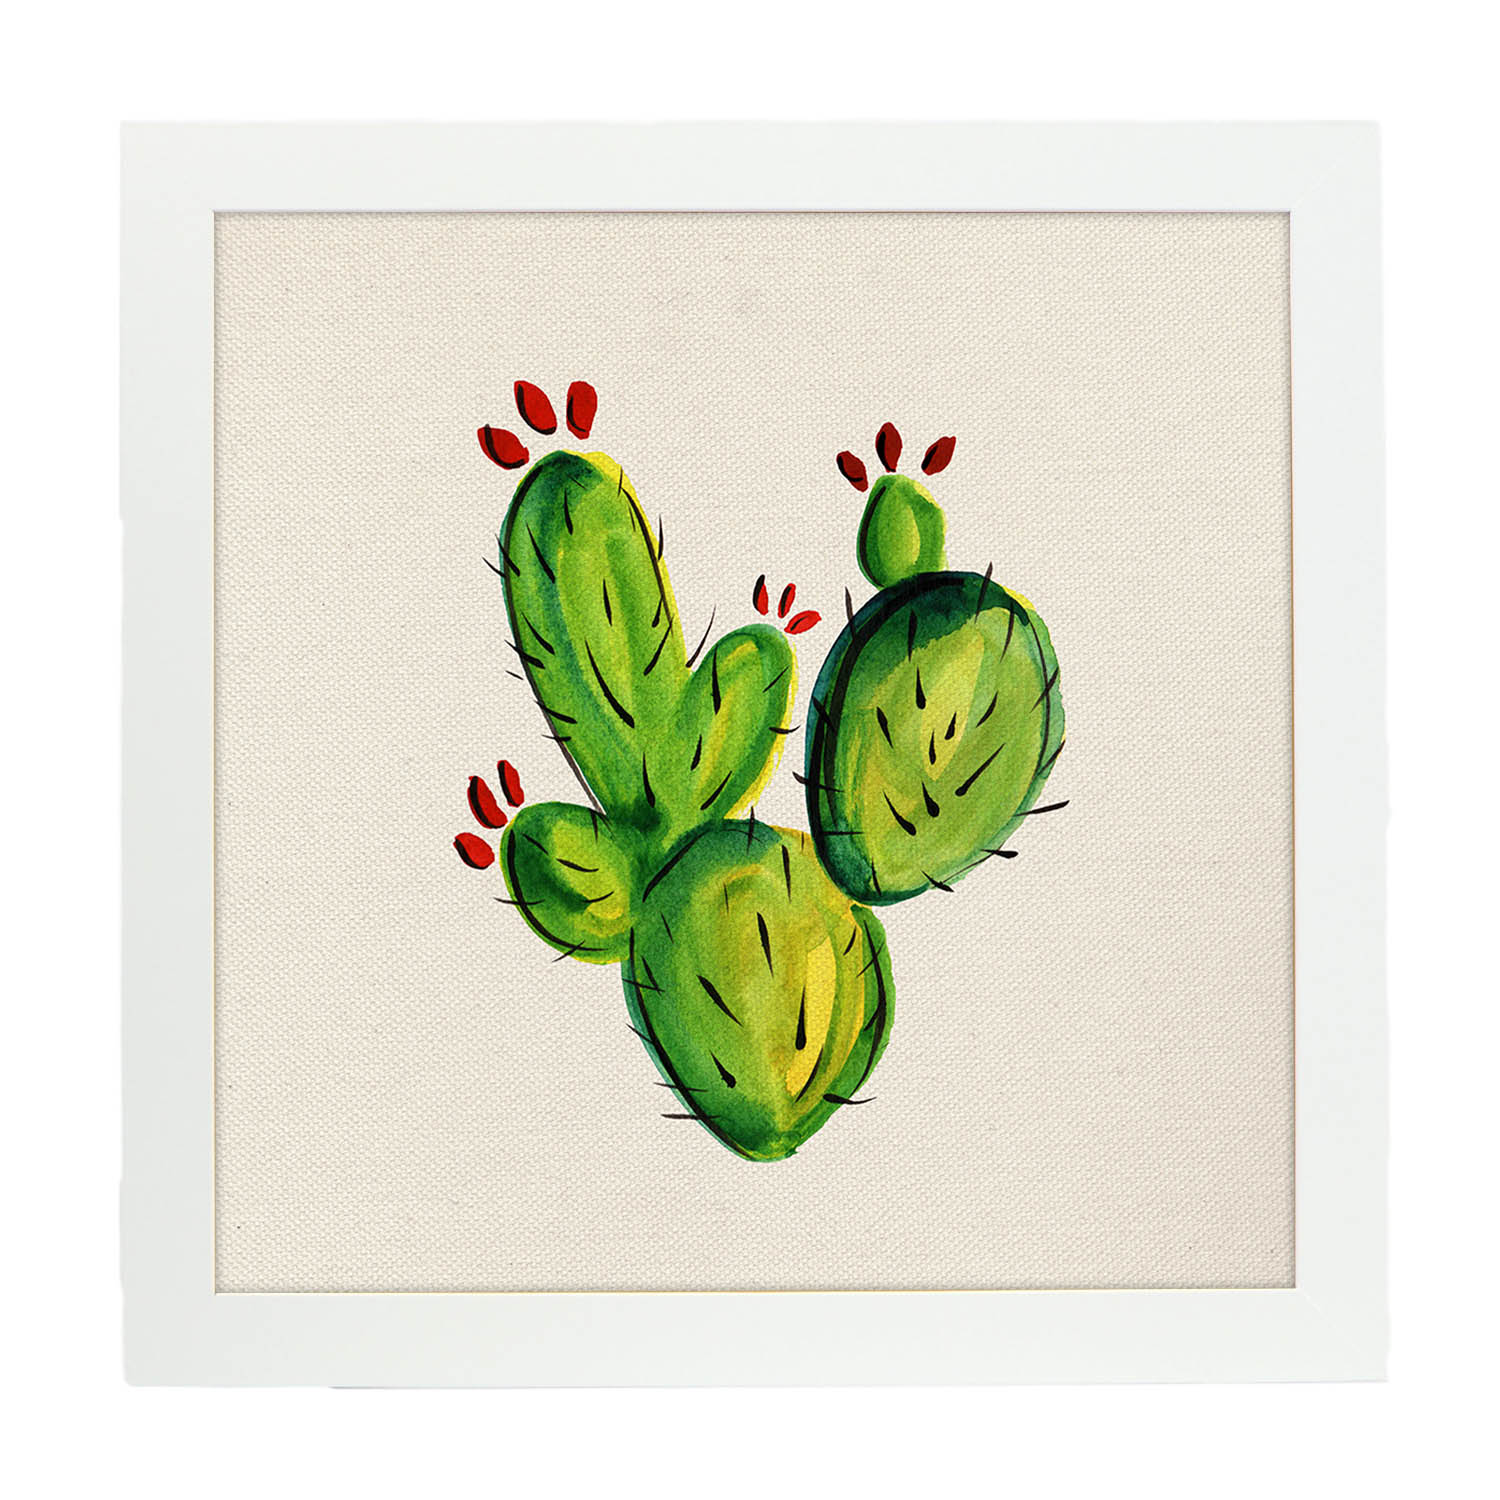 Poster de cactus dibujado. Lámina de Mírame, no me toques-Artwork-Nacnic-20x20 cm-Marco Blanco-Nacnic Estudio SL